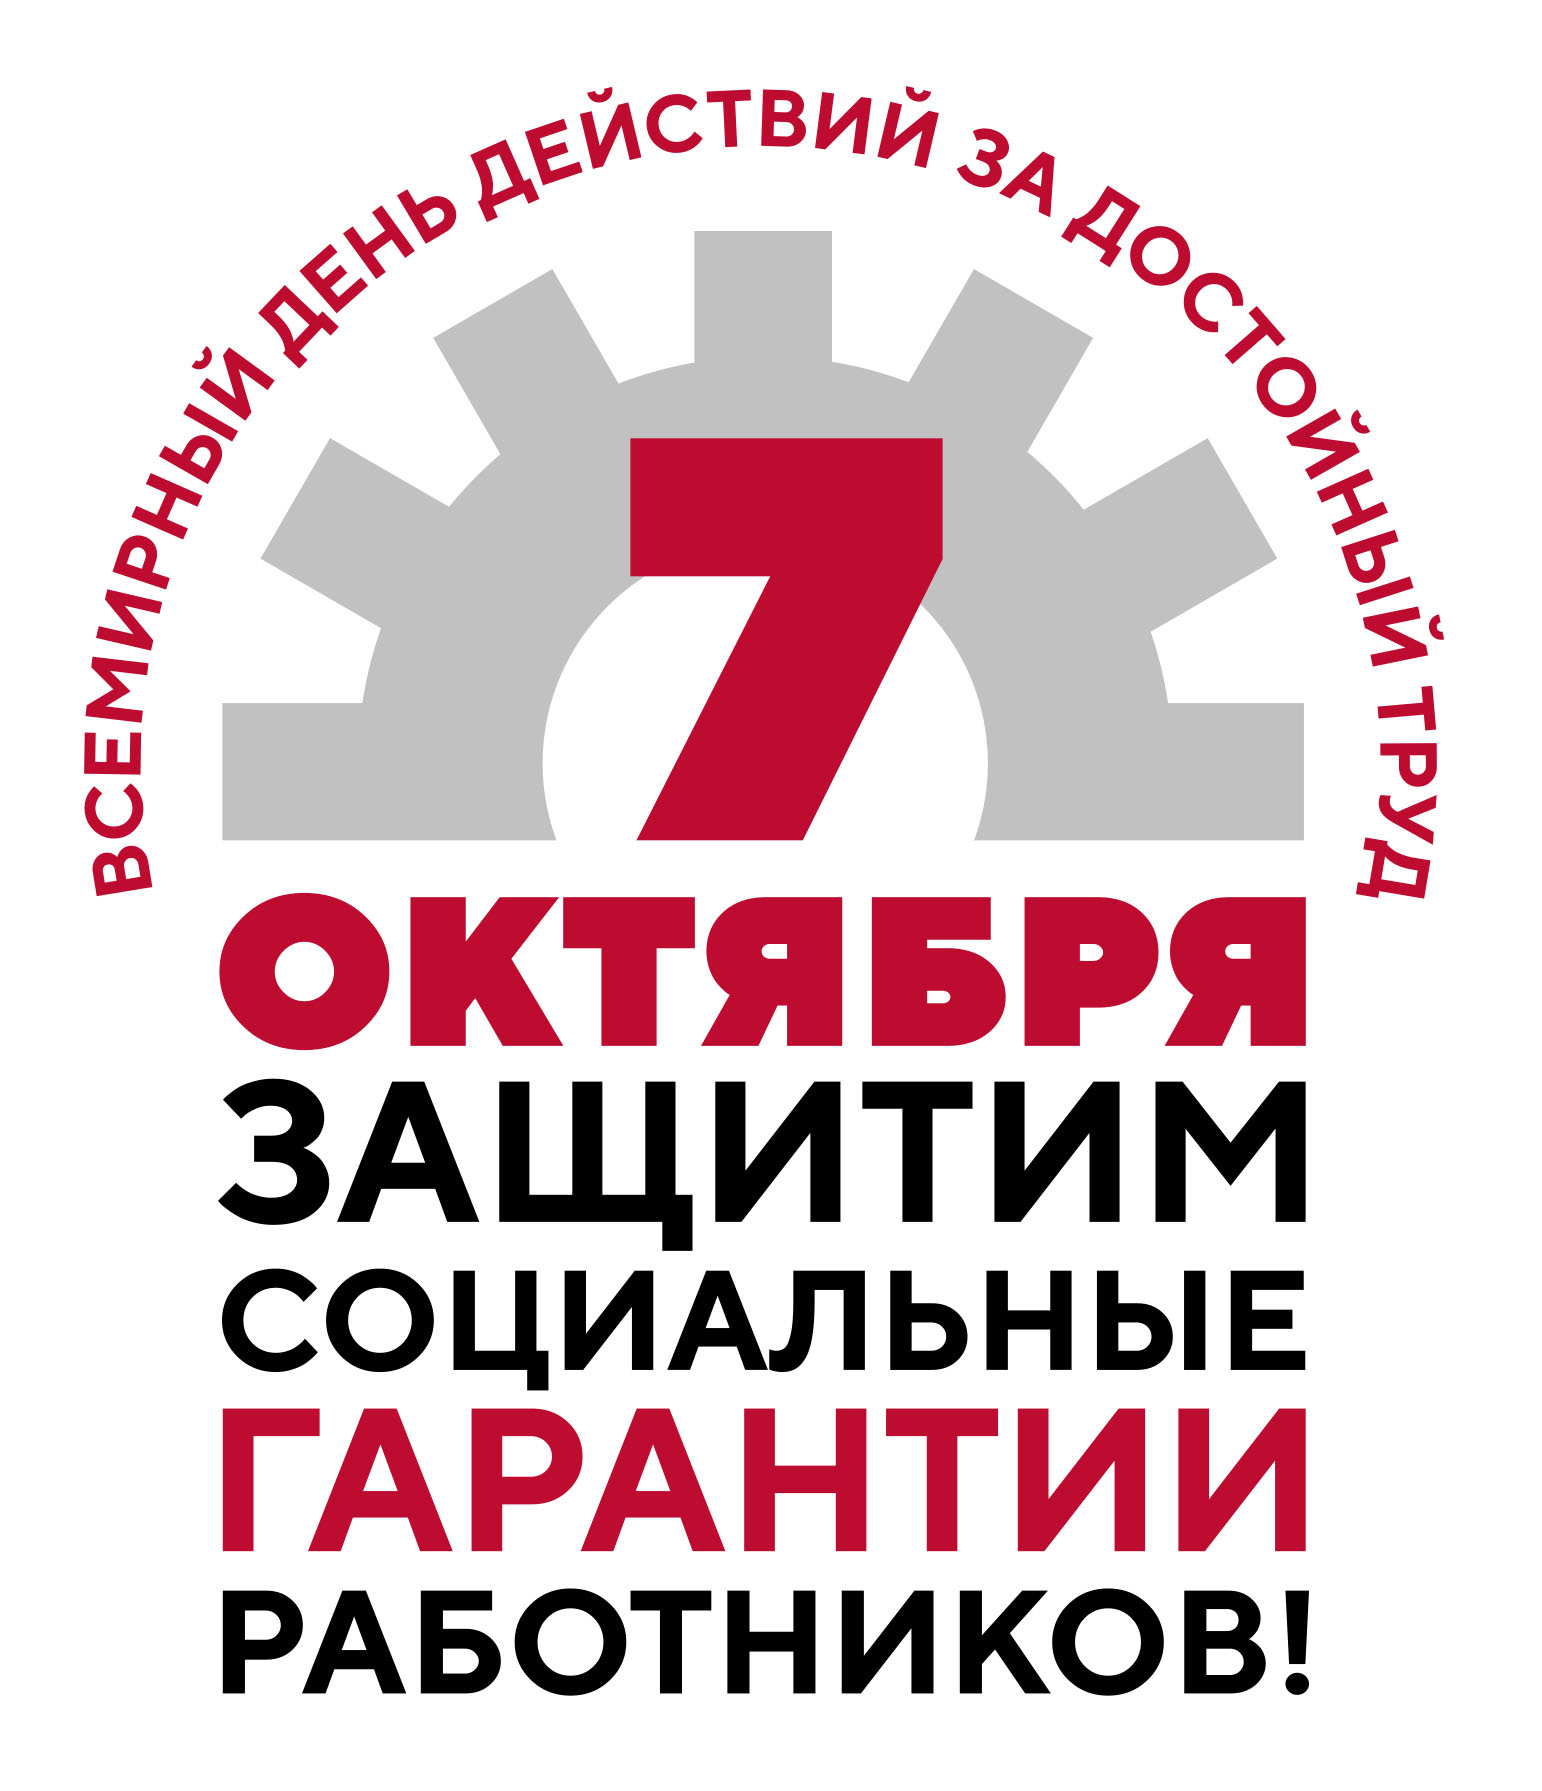 labor-logo-vertical.jpg